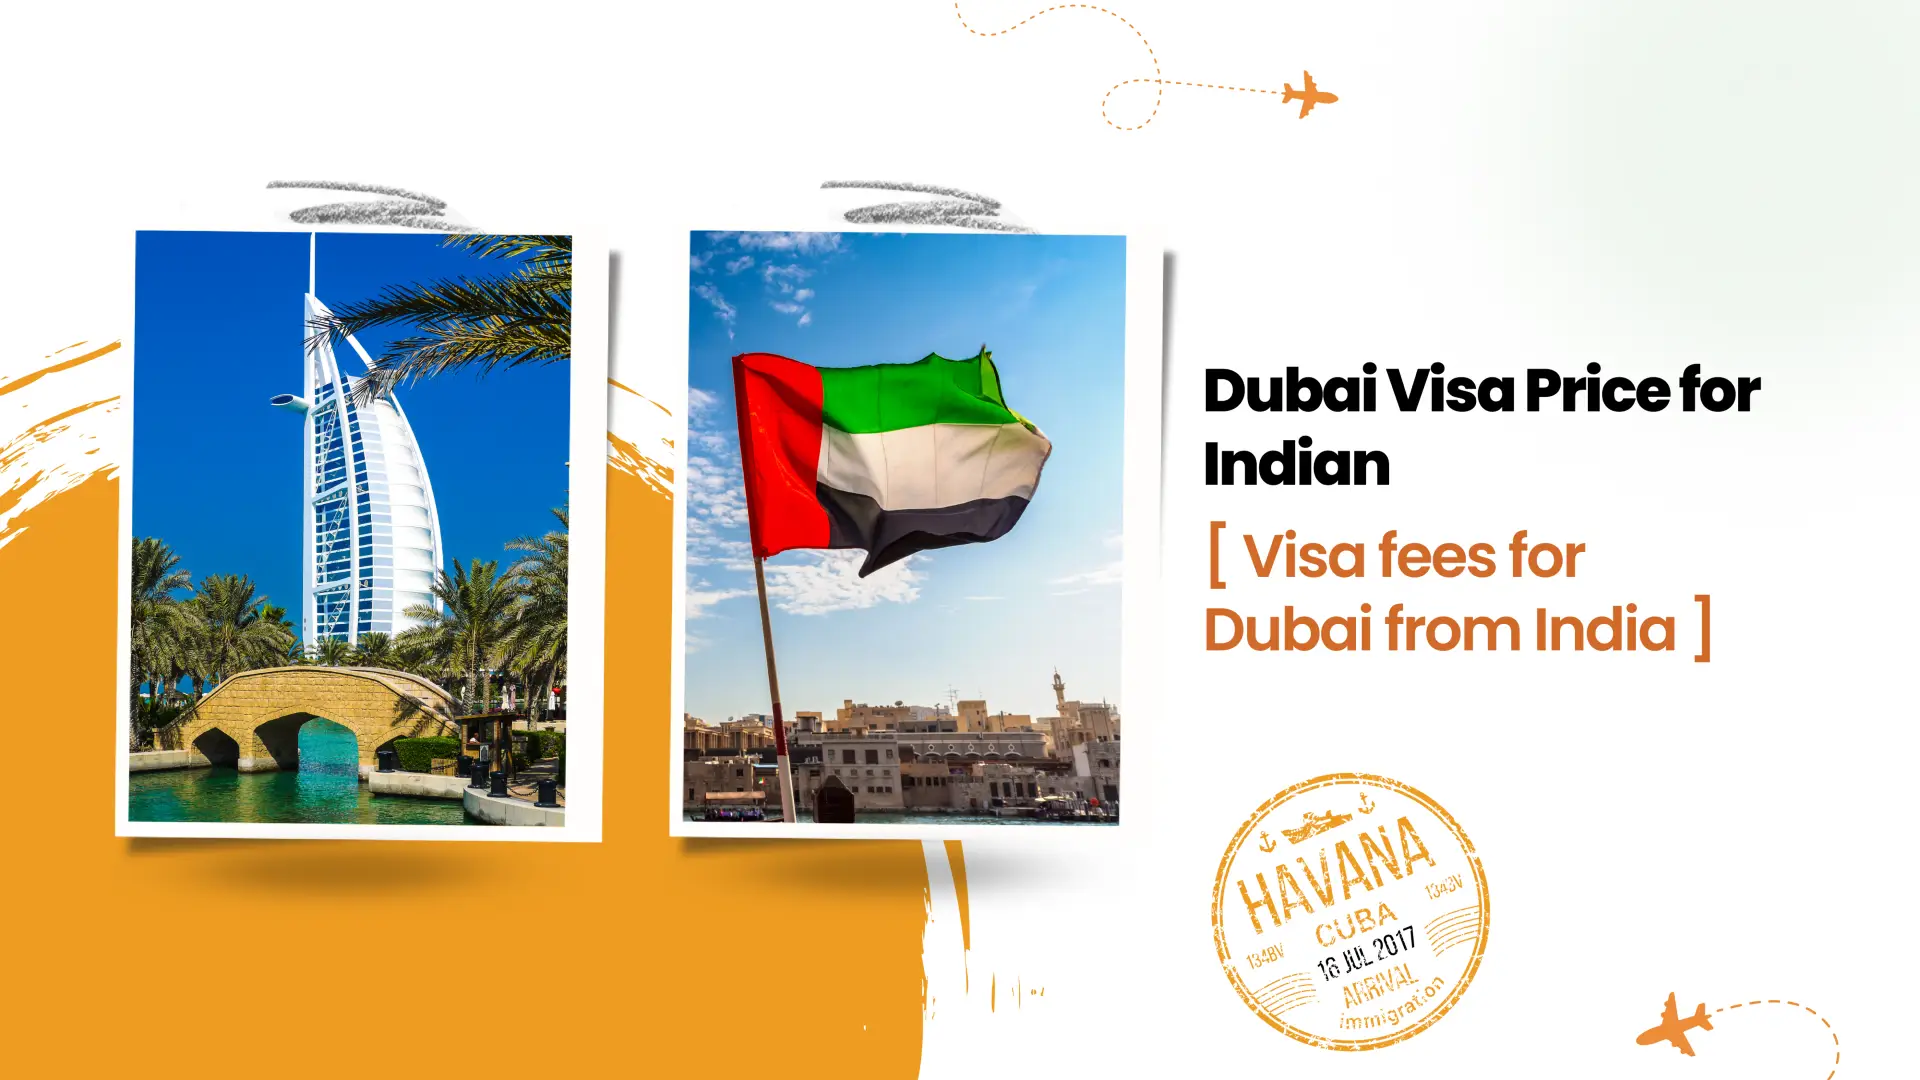 Dubai Visa Price for Indian [ Visa fees for Dubai from India ]